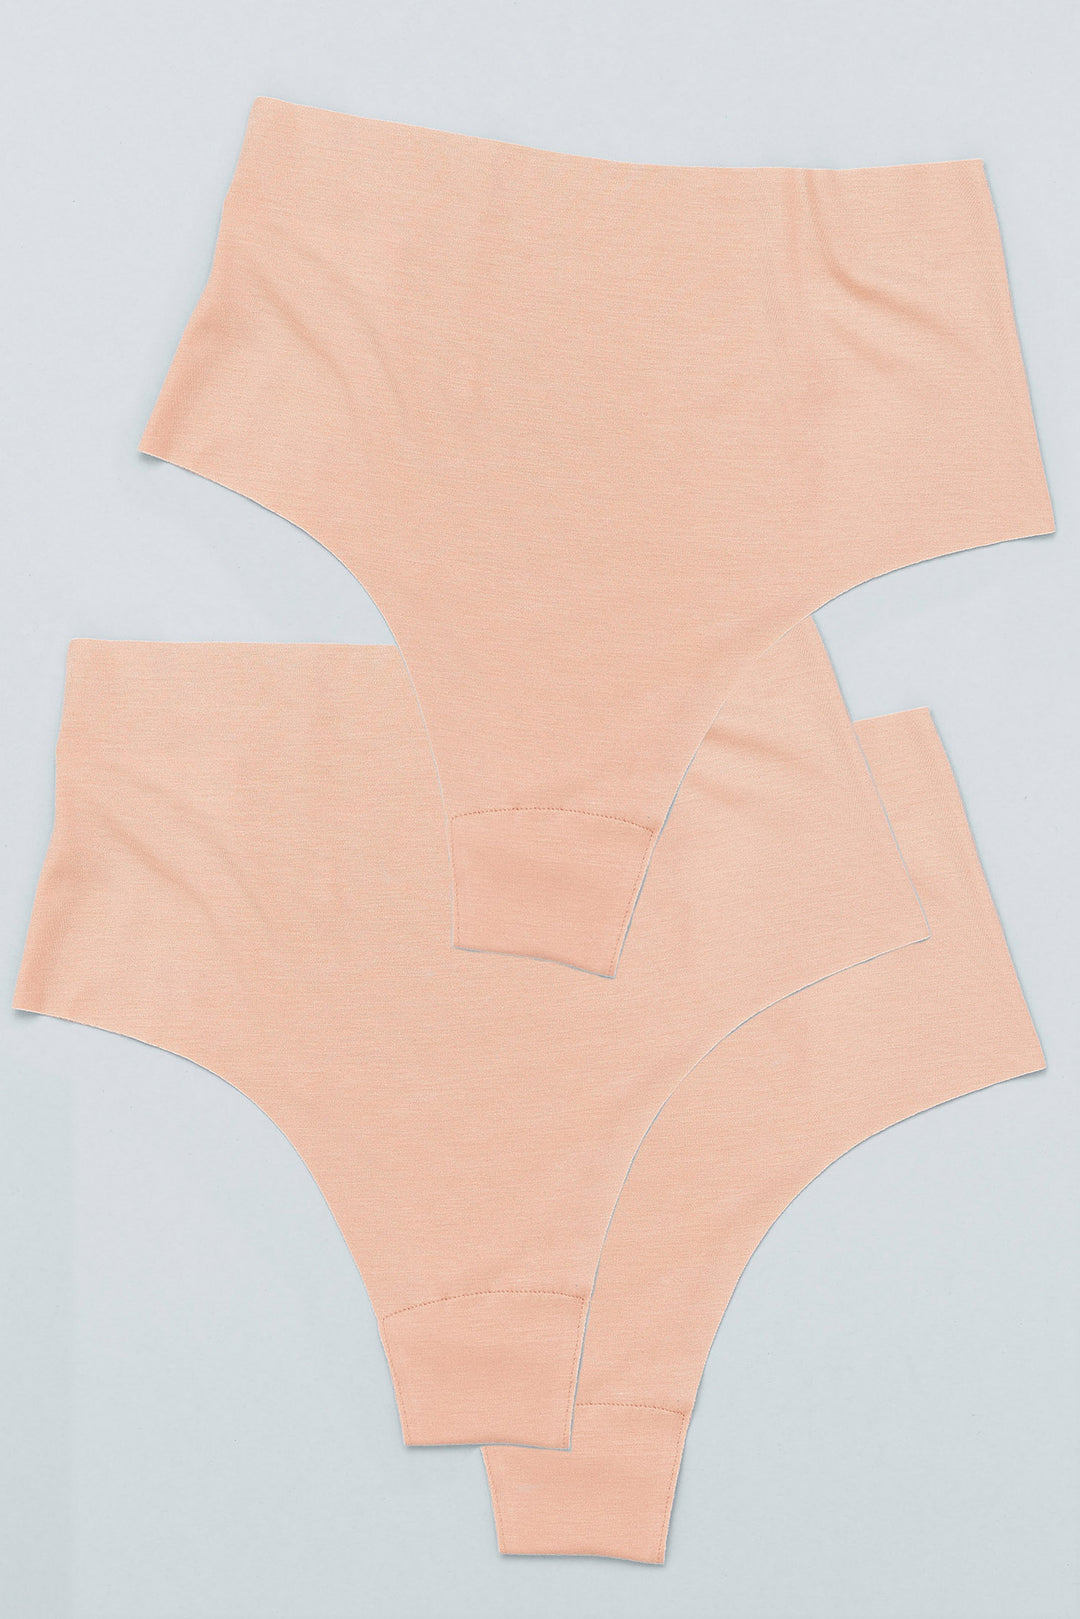 ZMHEGW Womens Underwear Seamless Underpants Patchwork Color Bikini Solid  Briefs Knickers Travel Gift 3 Pieces Period Panties 